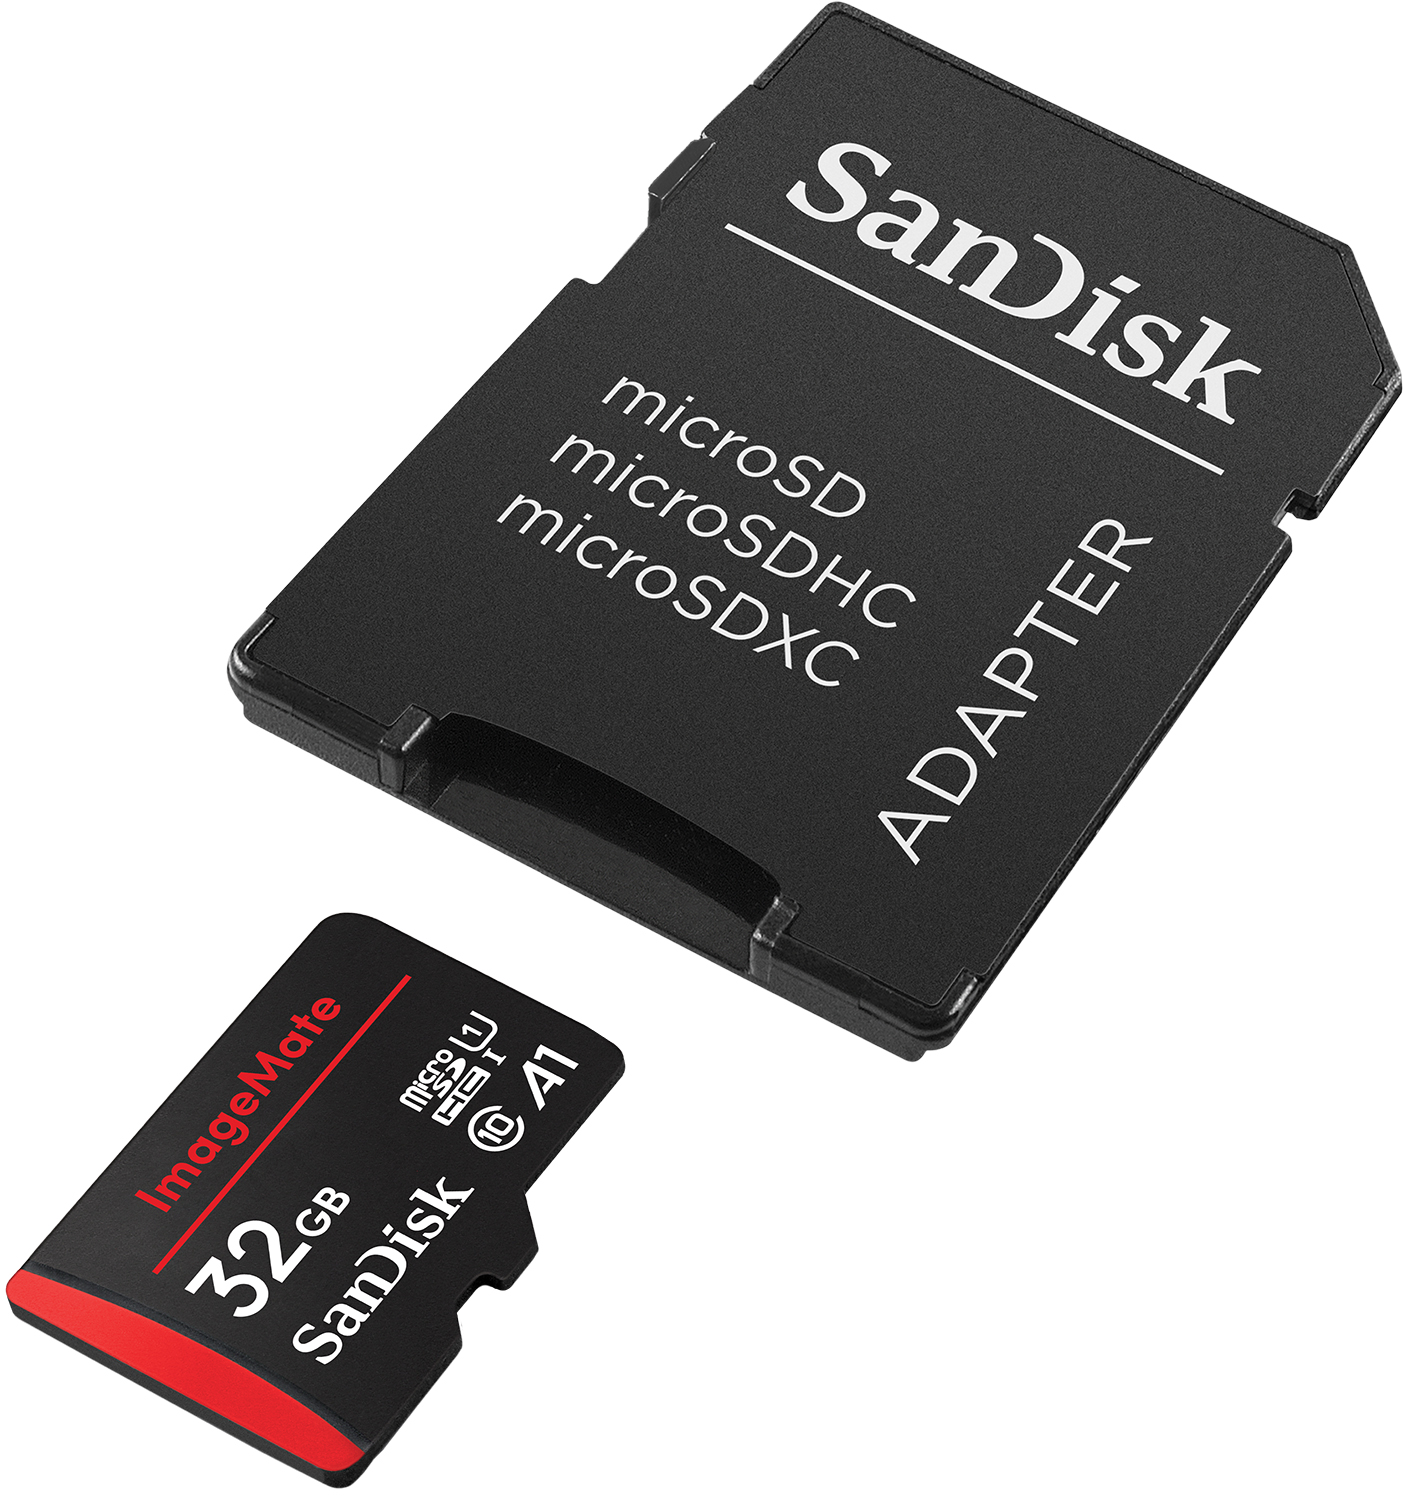 SanDisk 32GB ImageMate microSDHC UHS-1 Memory Card - Up to 120MB/s - SDSQUA4-032G-Aw6ka - image 4 of 11